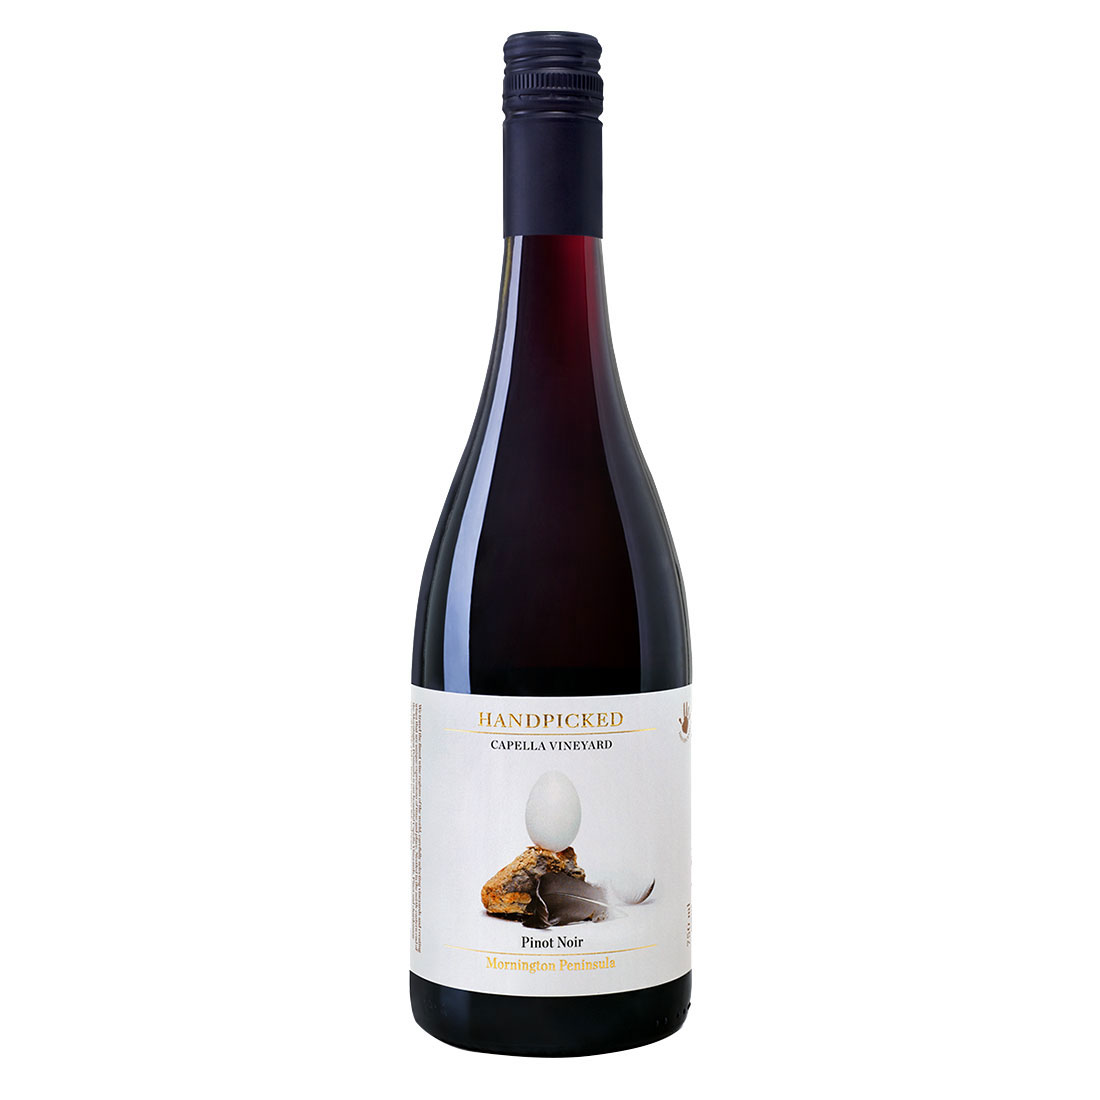 LB_Bottle-Handpicked-Capella-Vineyard-Pinot-Noir---No-Vintage